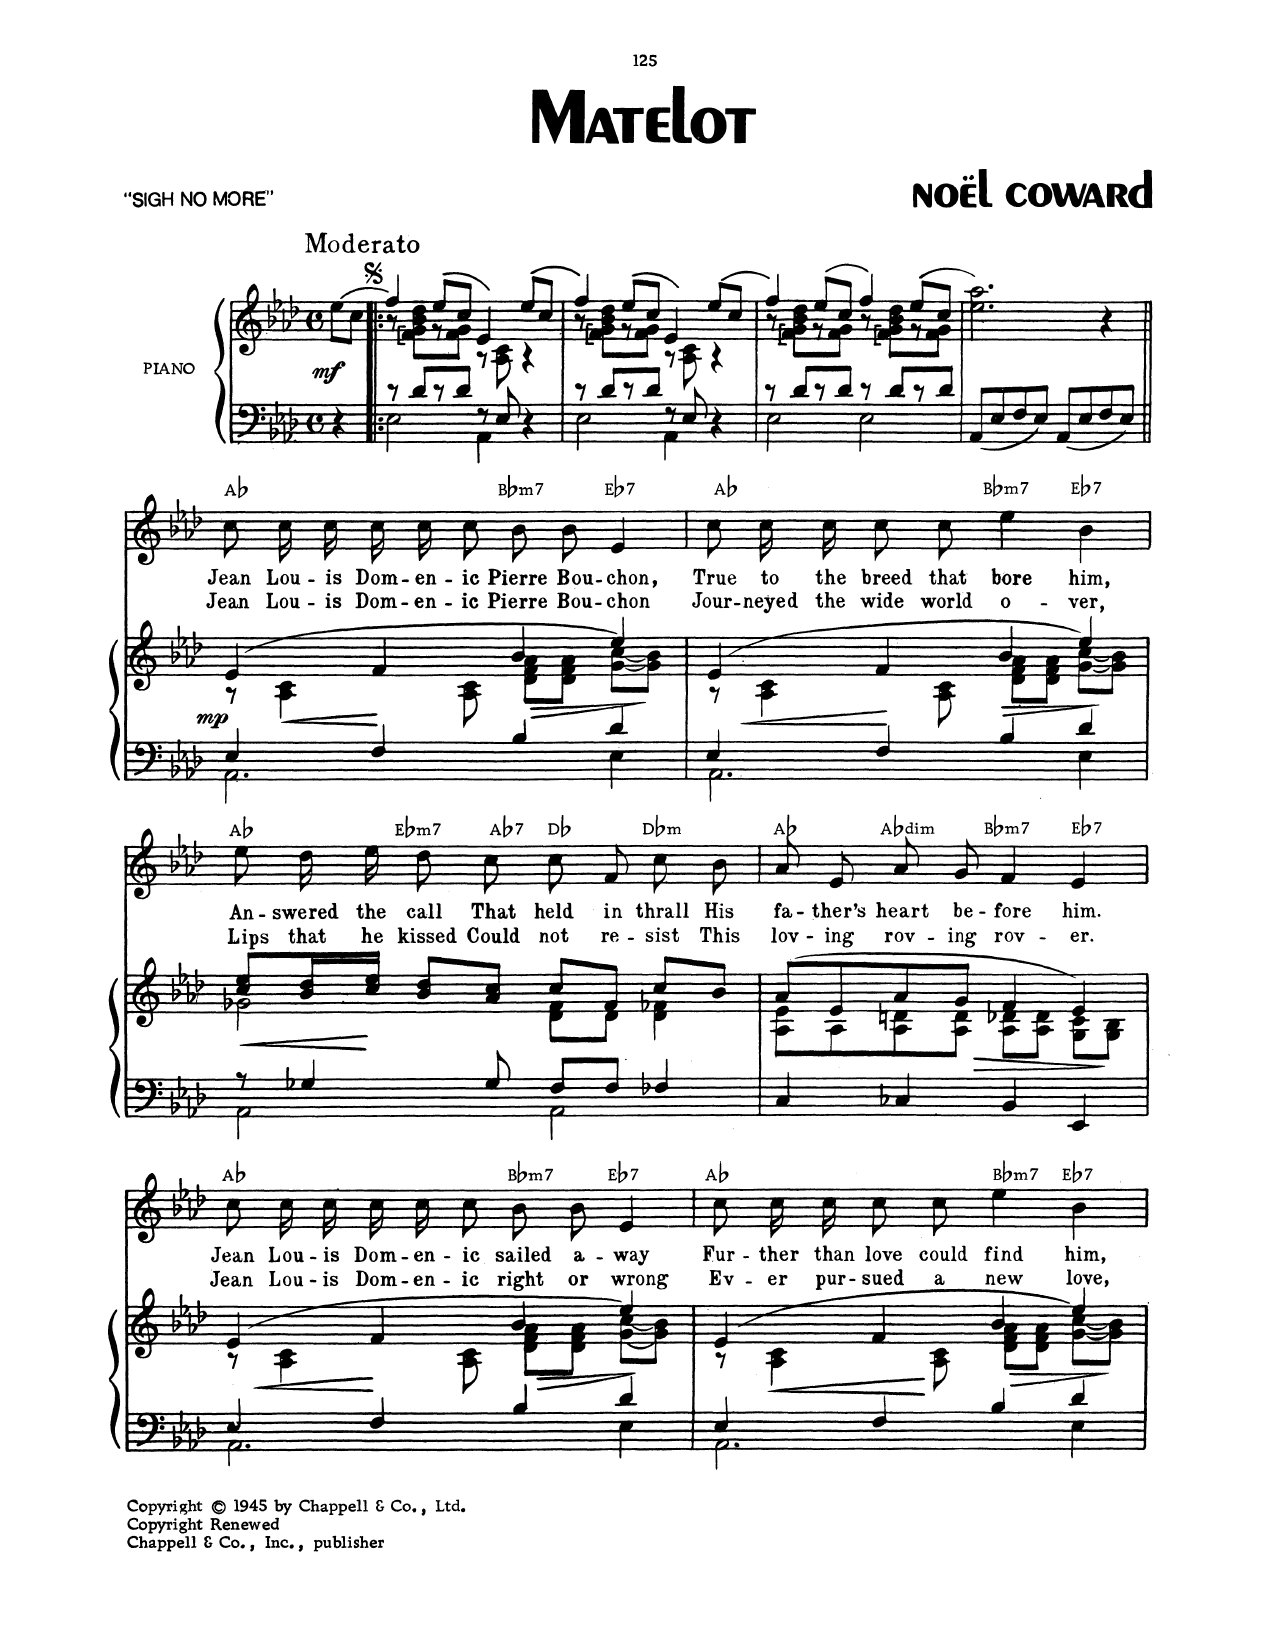 Noel Coward Matelot Sheet Music Notes & Chords for Piano, Vocal & Guitar (Right-Hand Melody) - Download or Print PDF